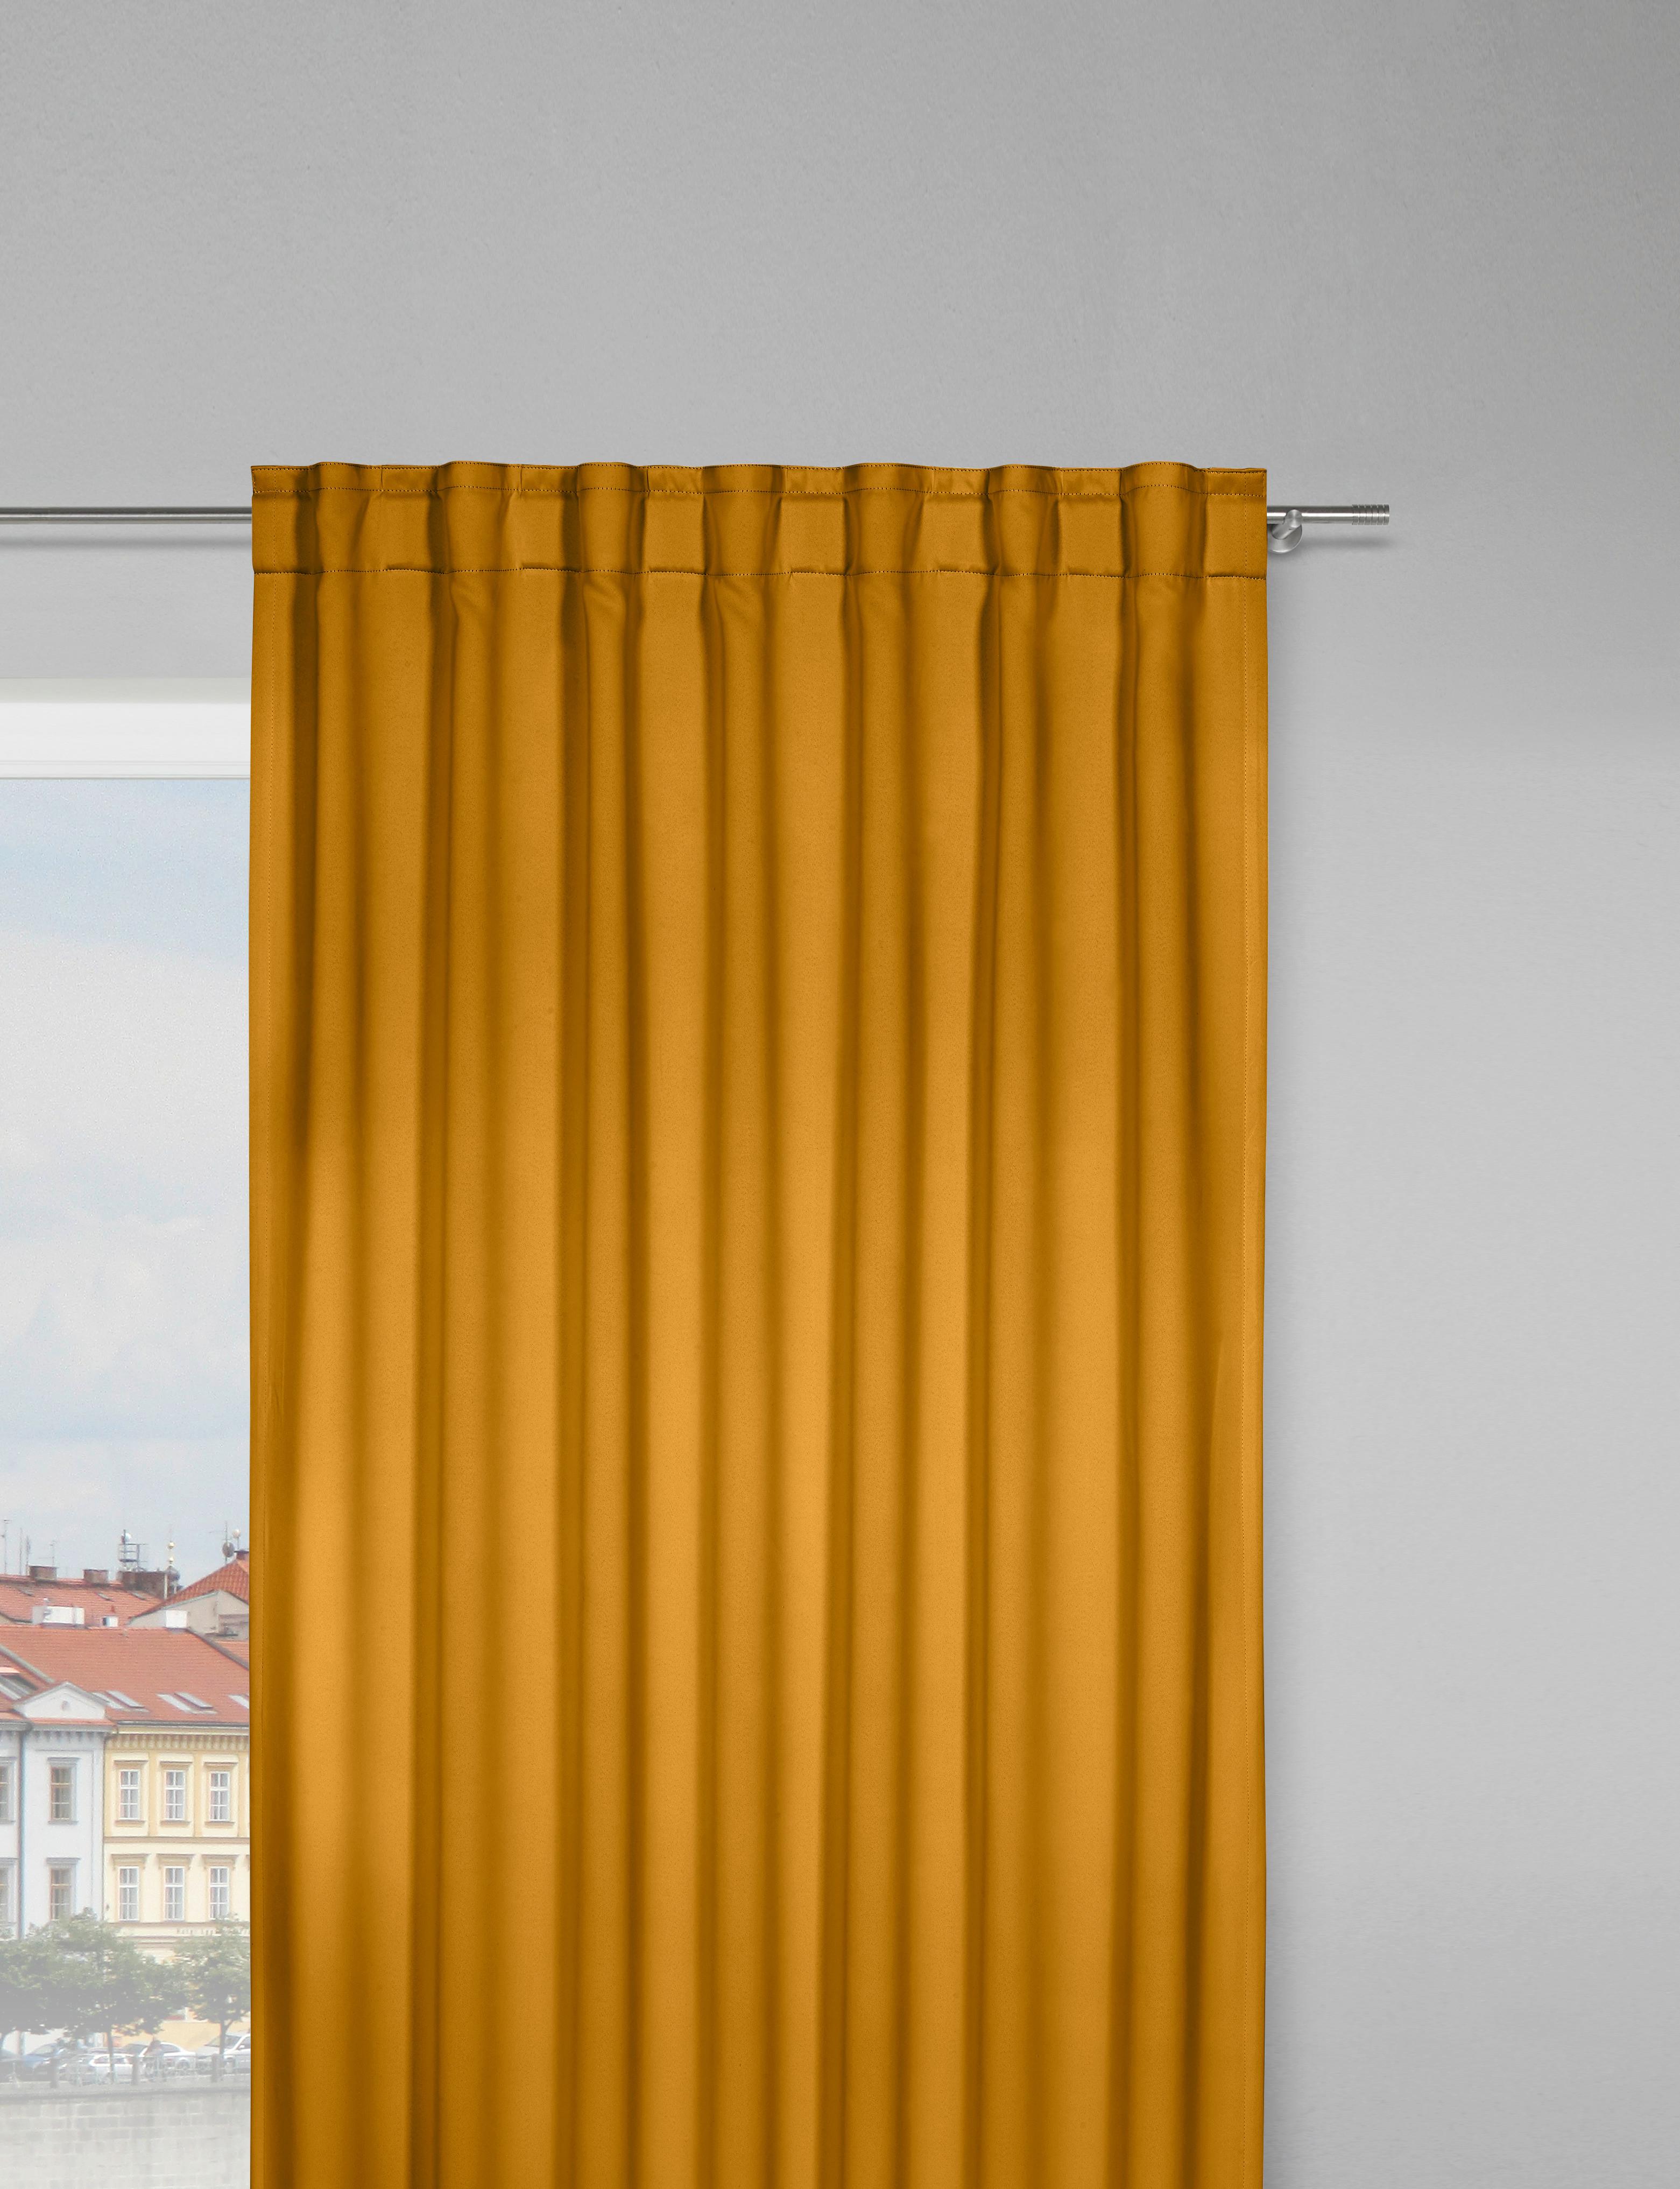 ZAVJESA ZA ZAMRAČIVANJE RICCARDO - žuta, Modern, tekstil (140/245cm) - Premium Living